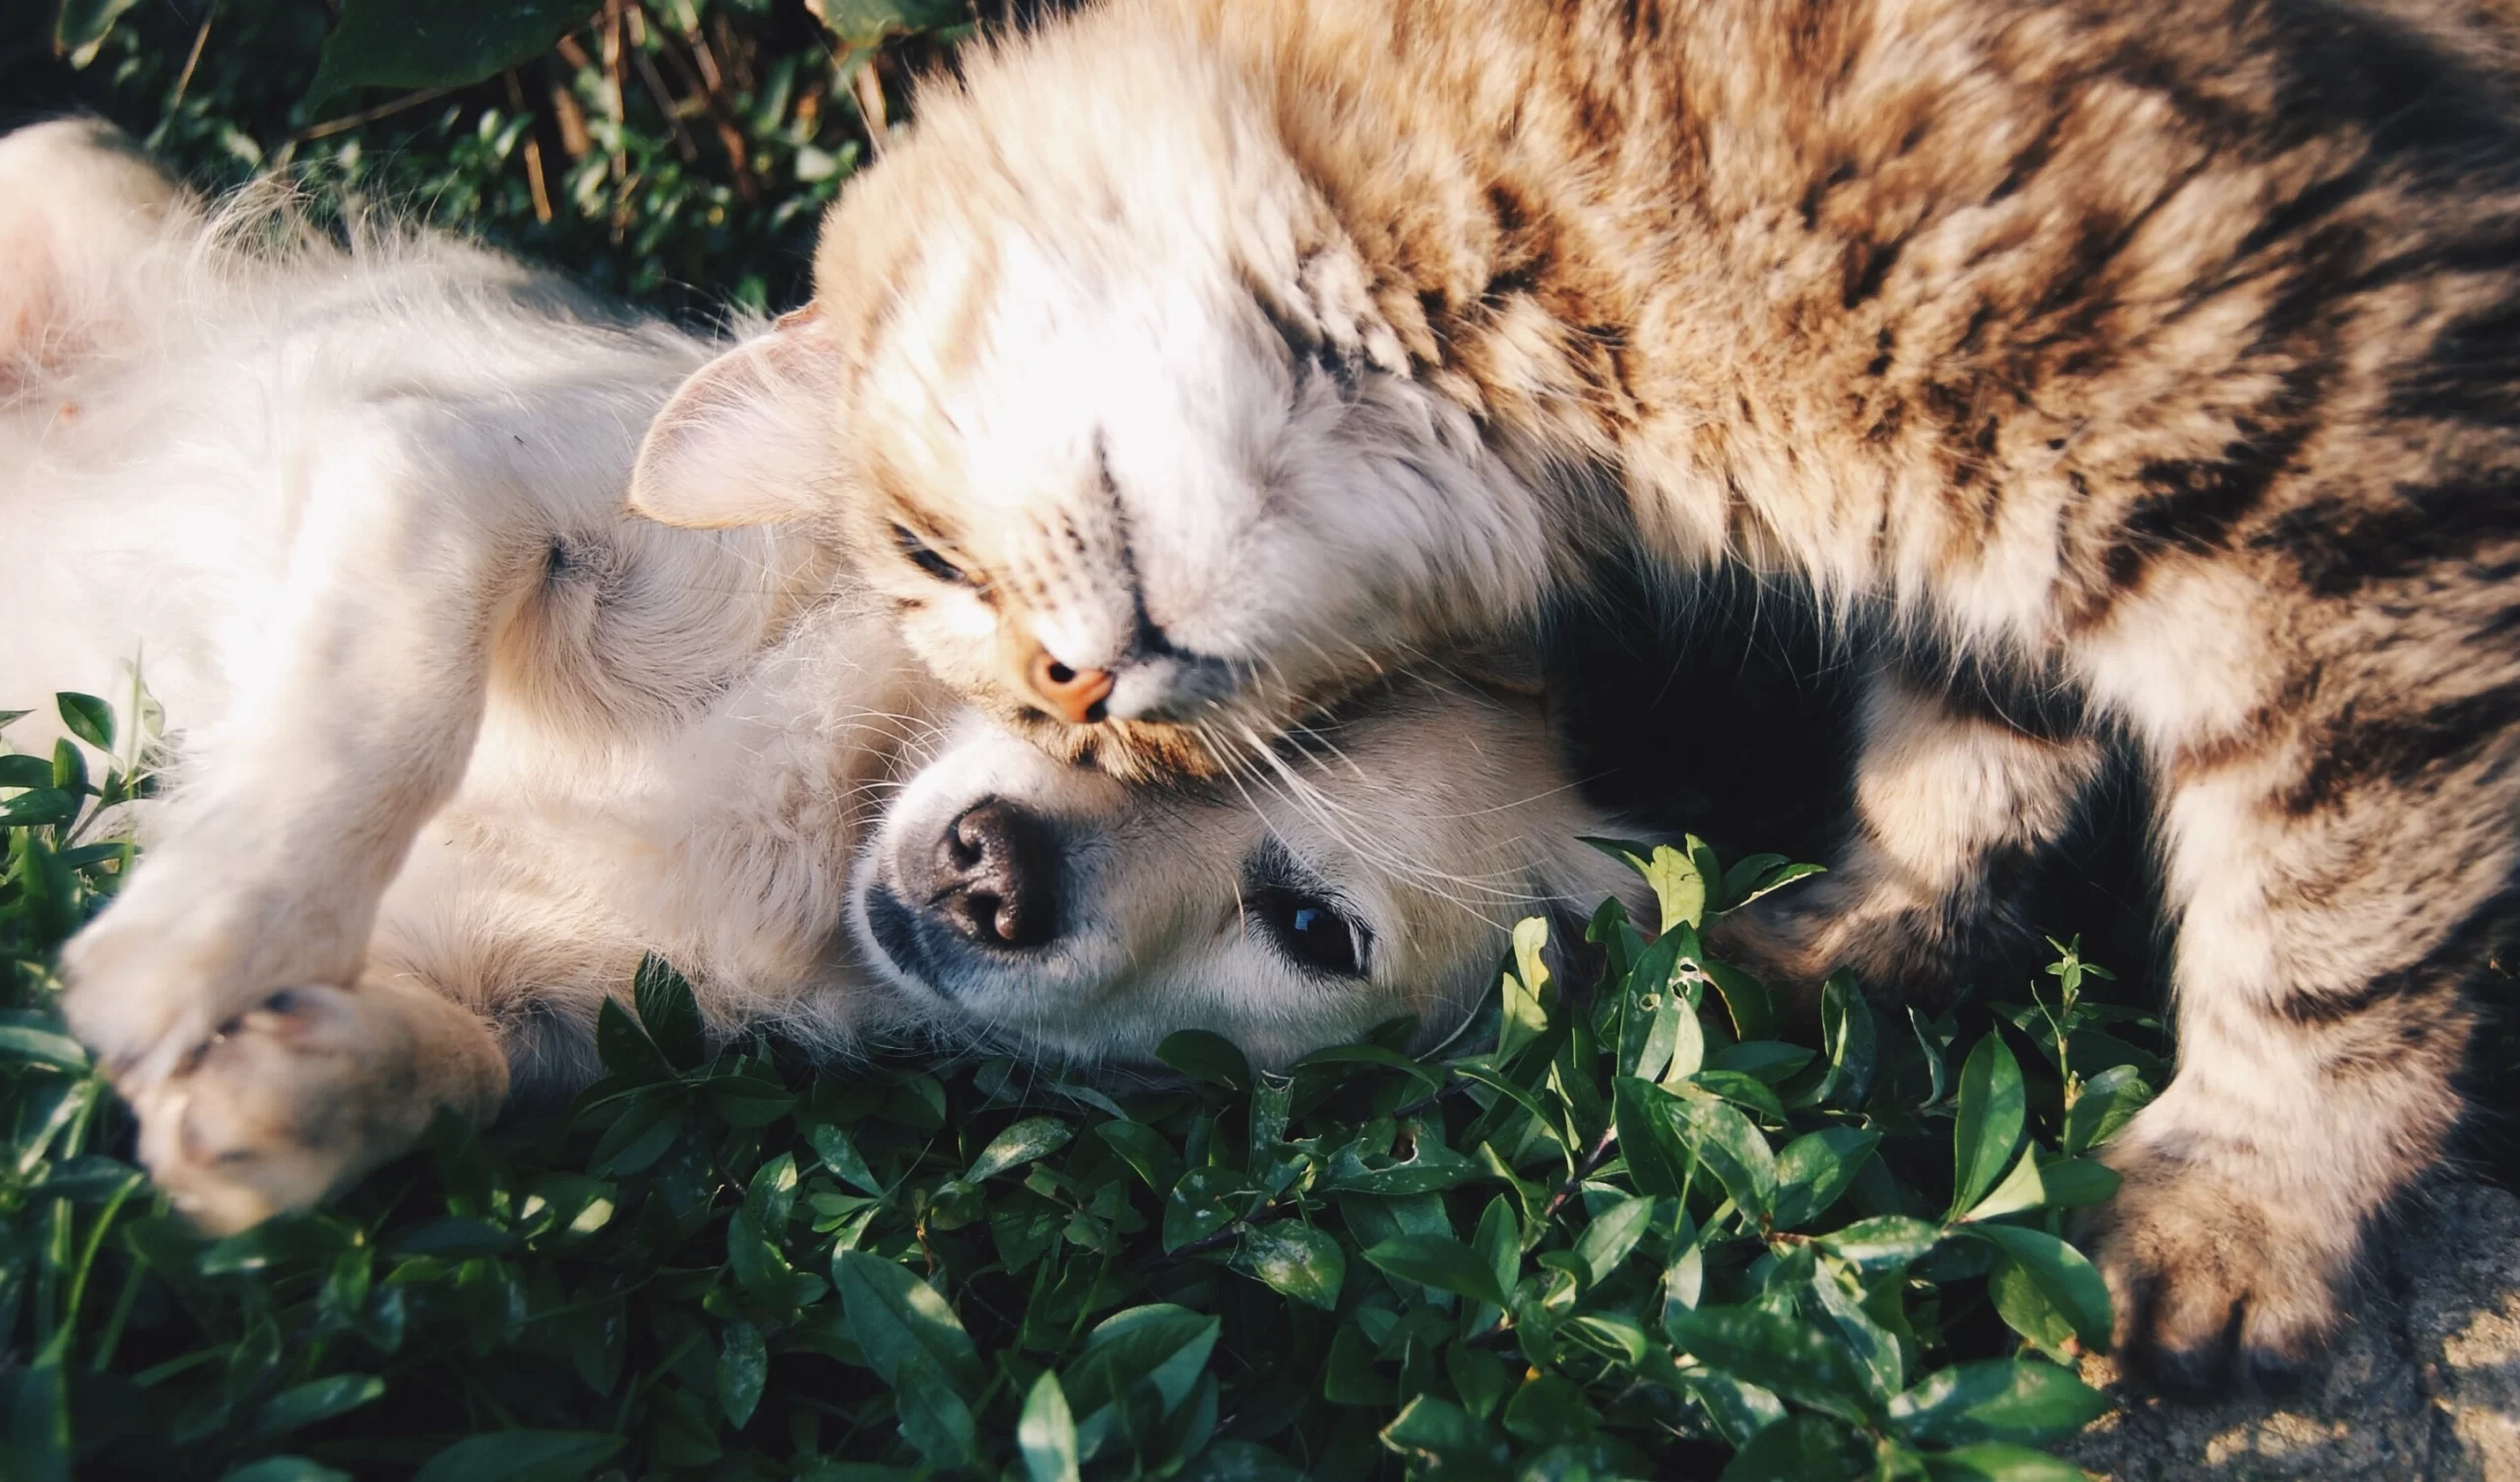 krista-mangulsone-Cat head cuddle with small dog on ivy-unsplash (1)